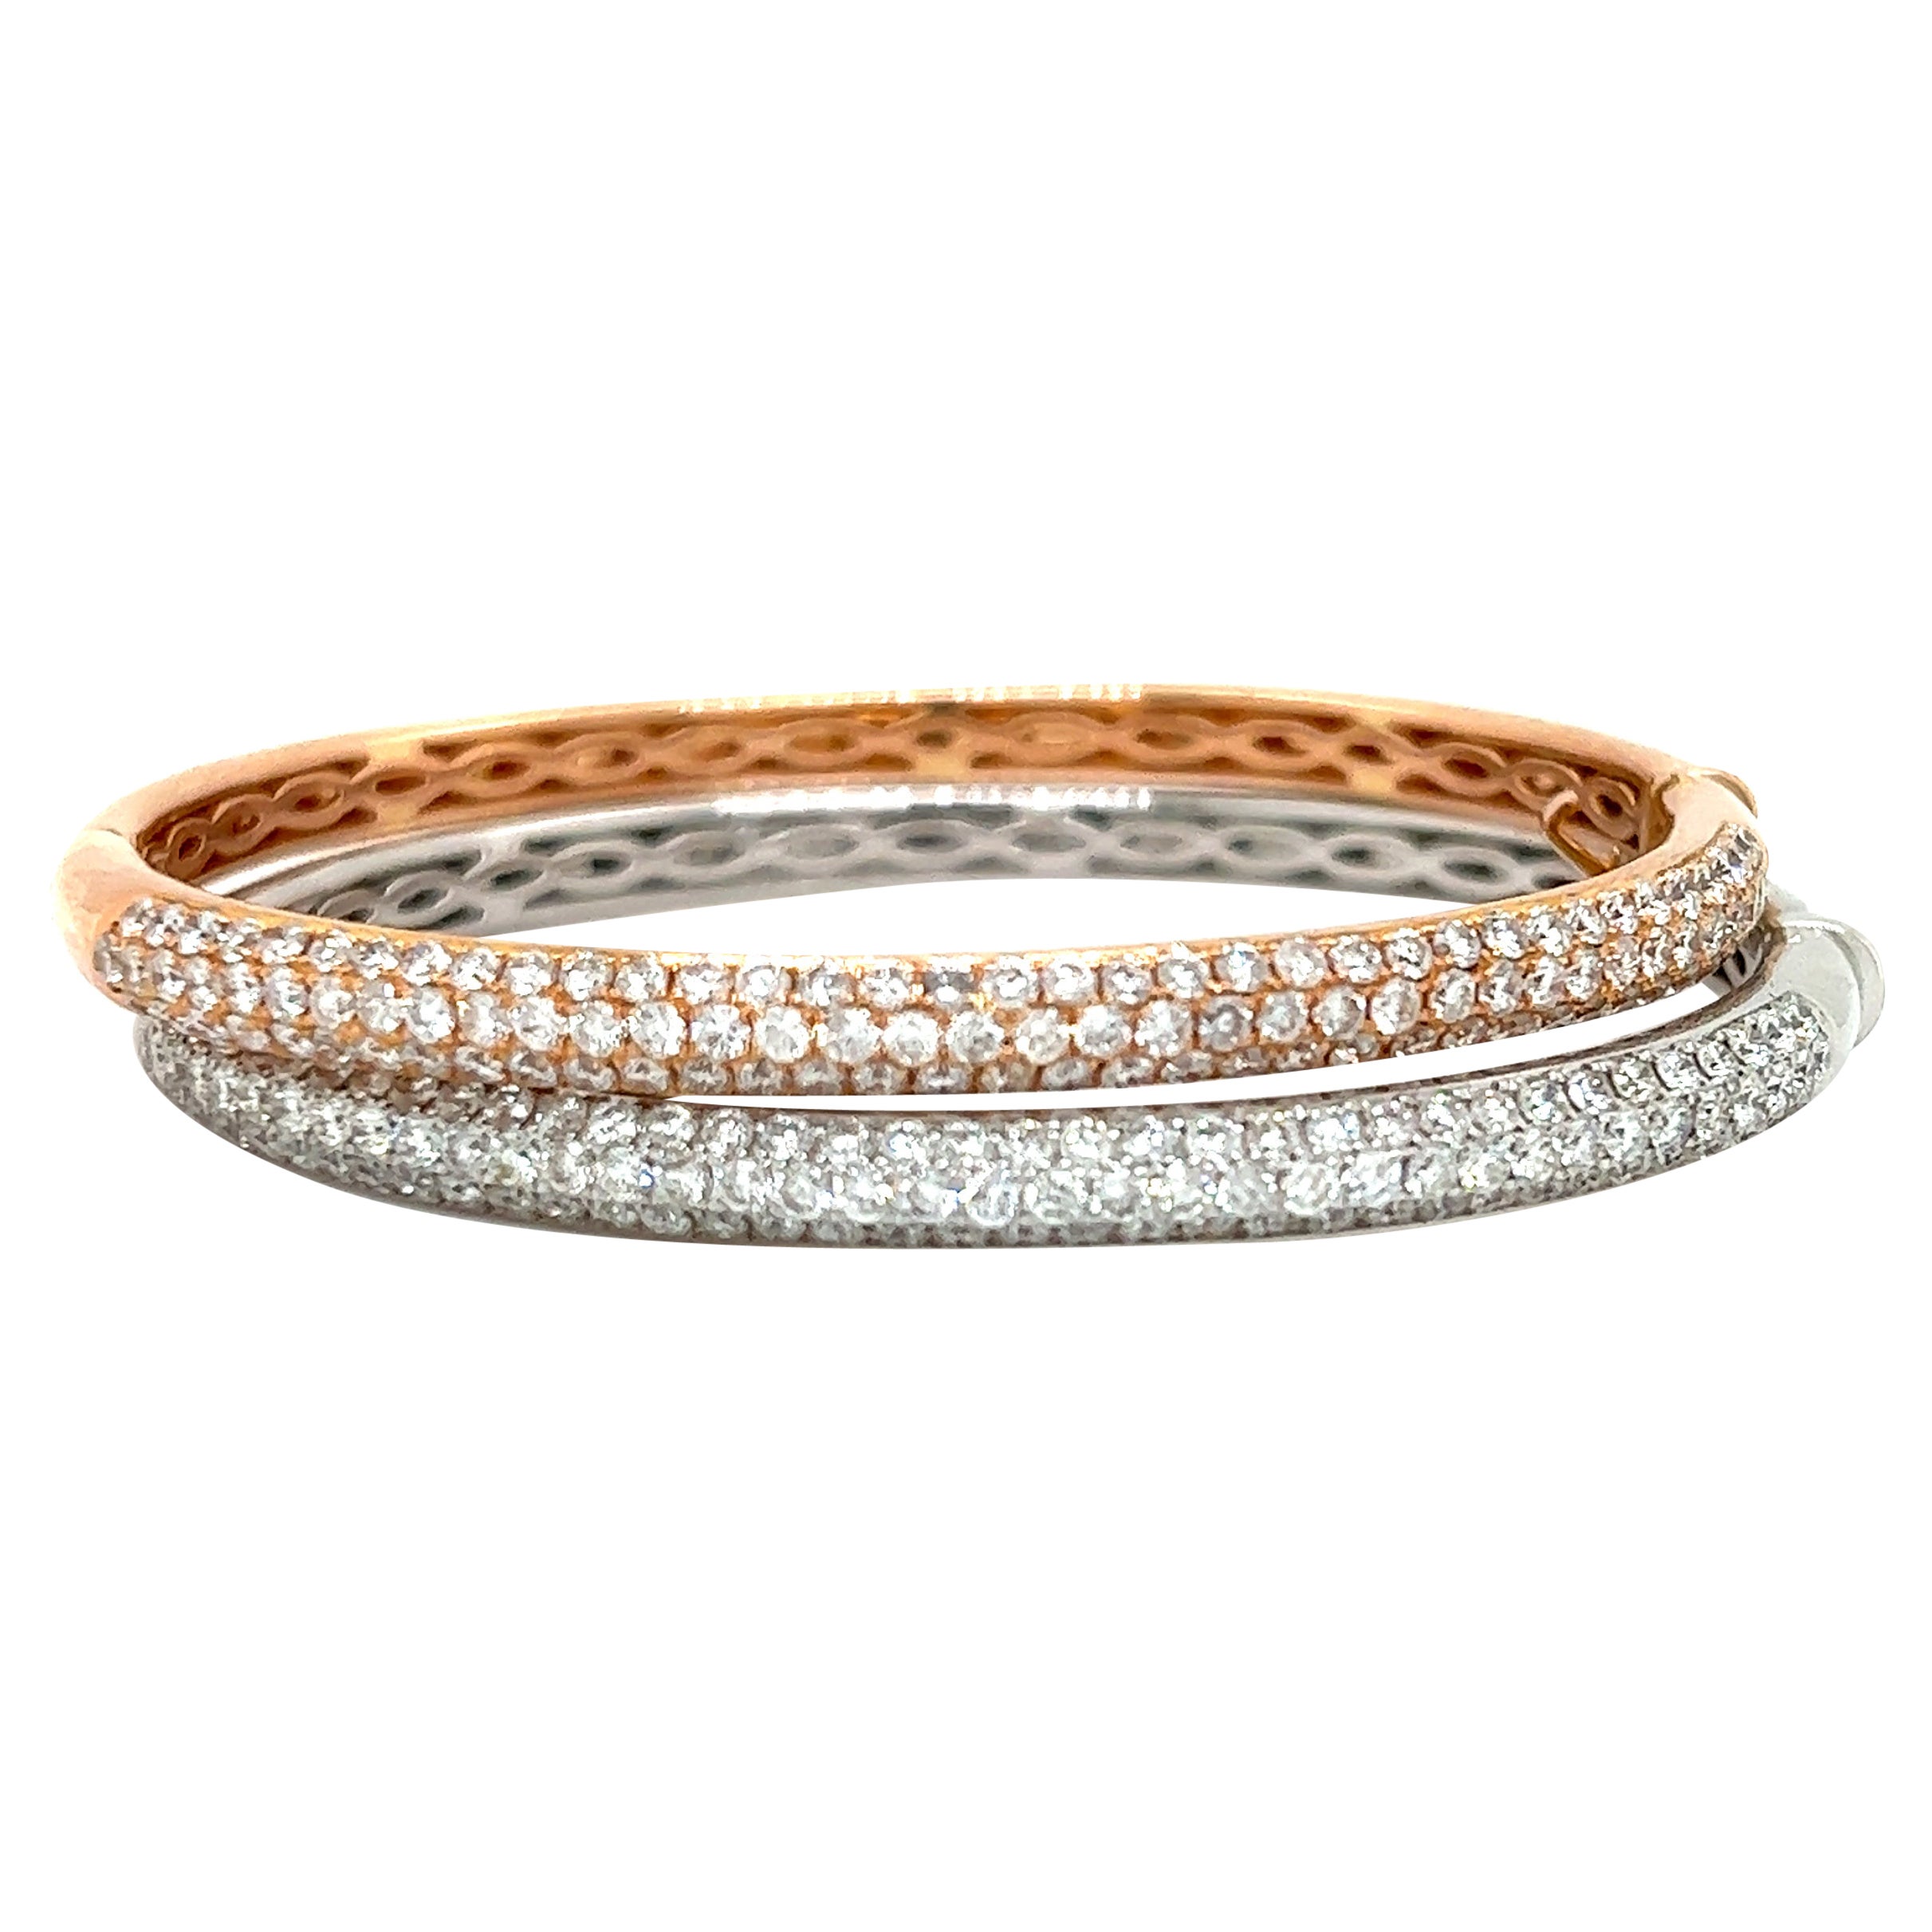 White & Rose Gold 18k Diamond Bangle Bracelet Set 4.51 Carat